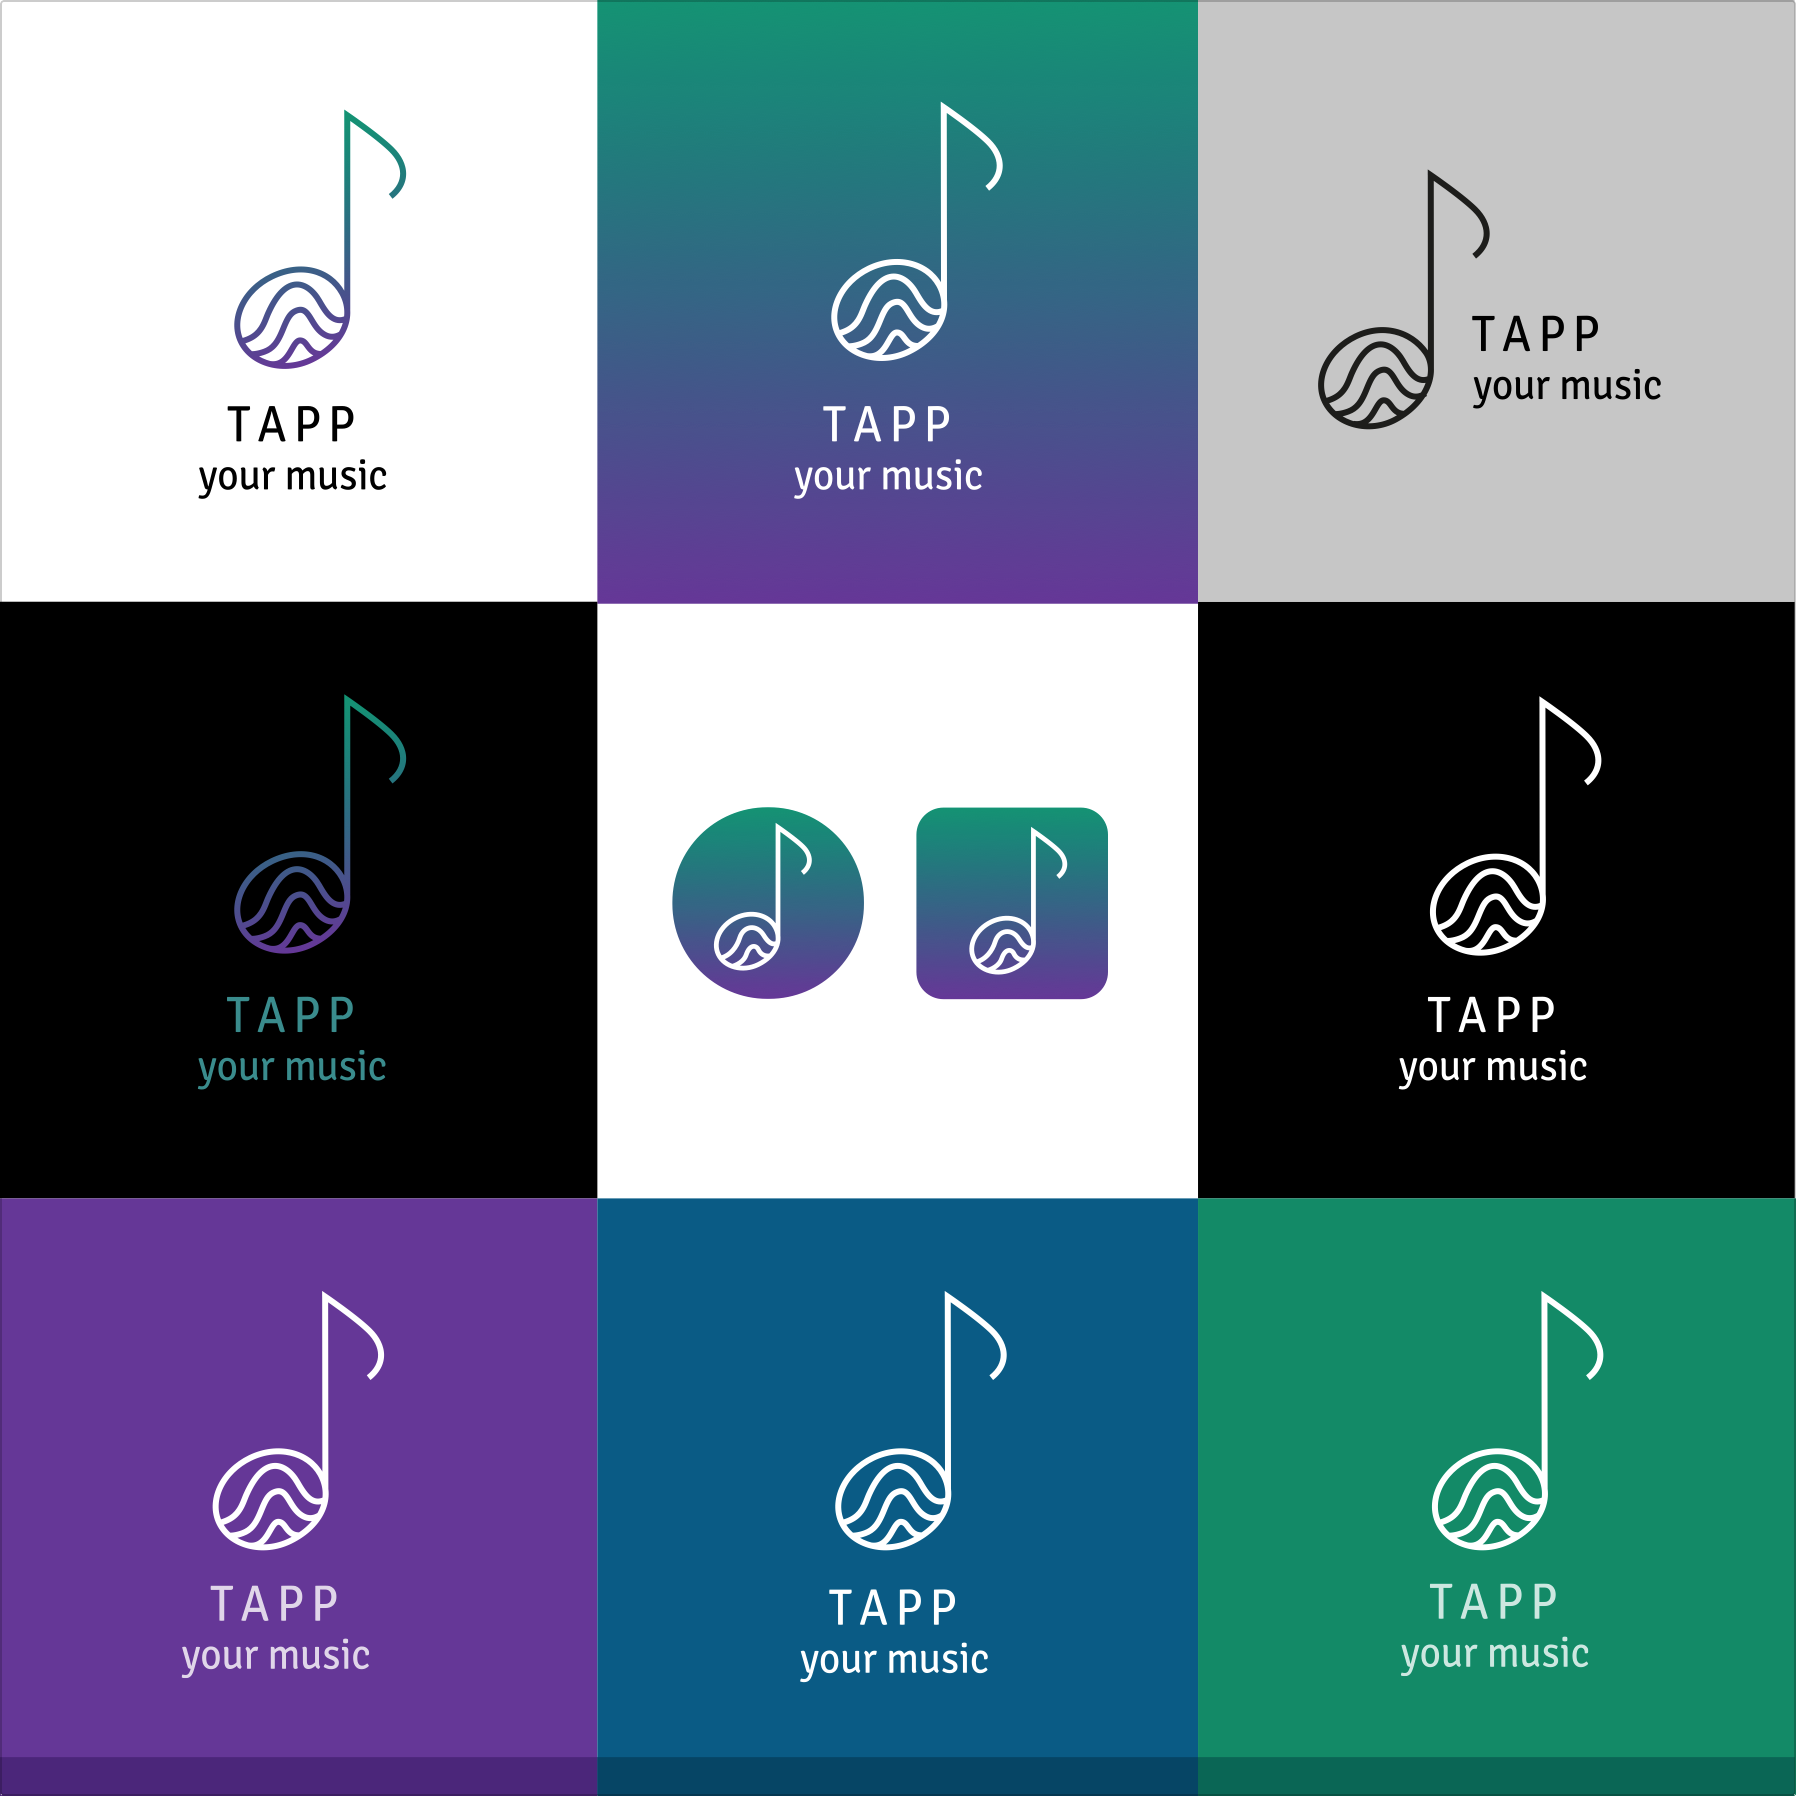 TApp your music logo